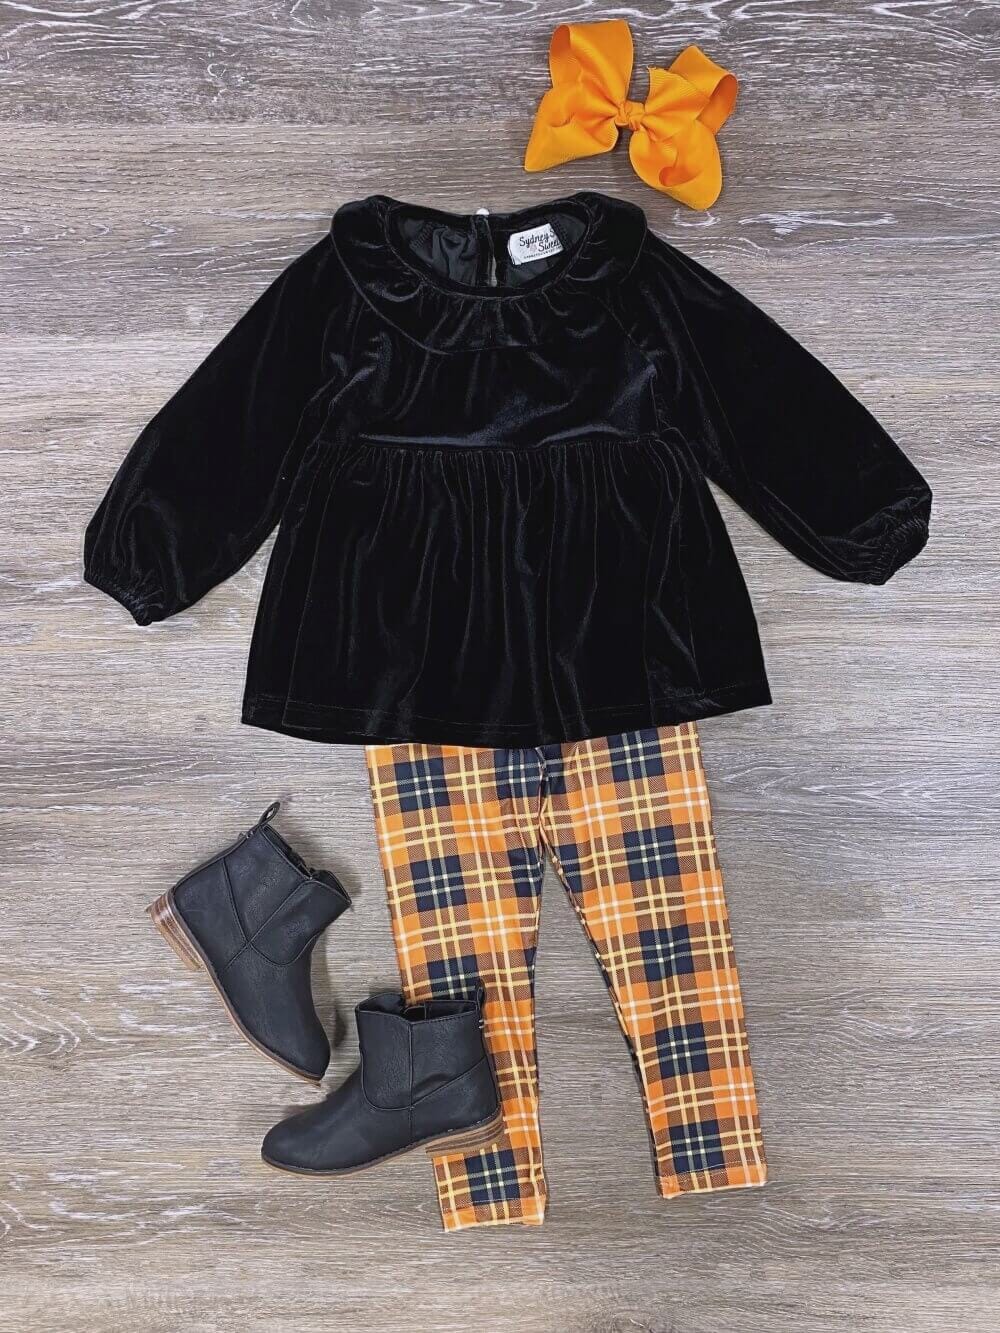 Orange & Black Velvet Top Plaid Leggings Outfit